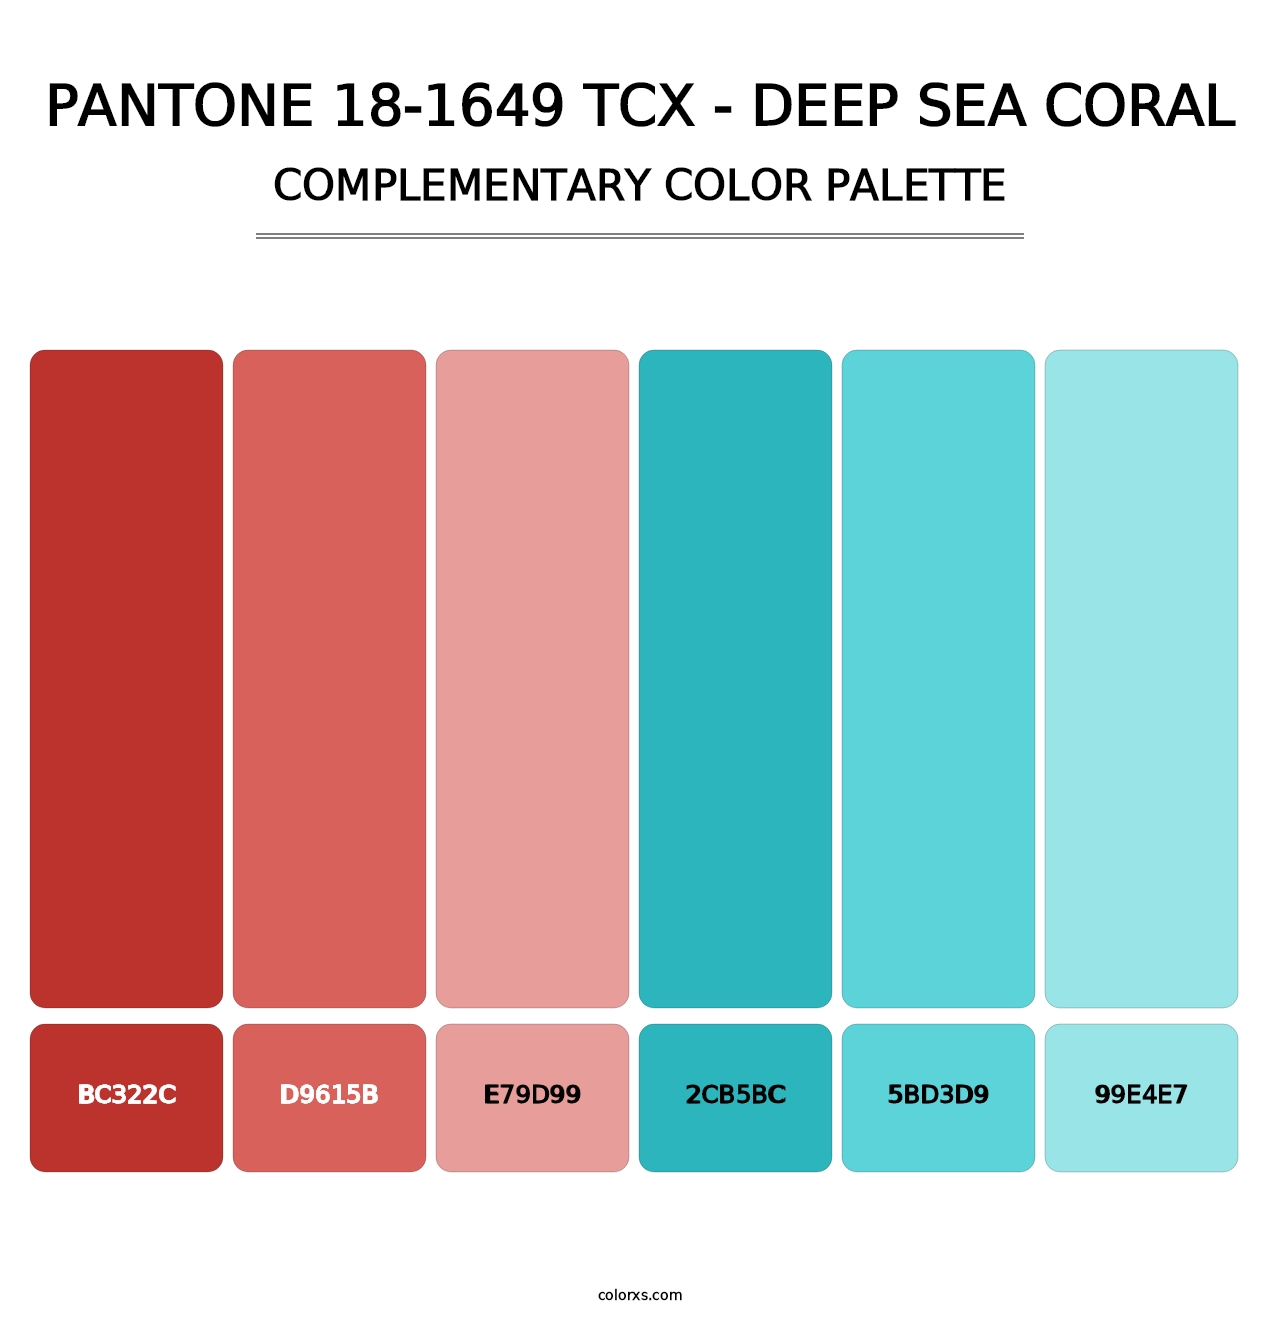 PANTONE 18-1649 TCX - Deep Sea Coral - Complementary Color Palette